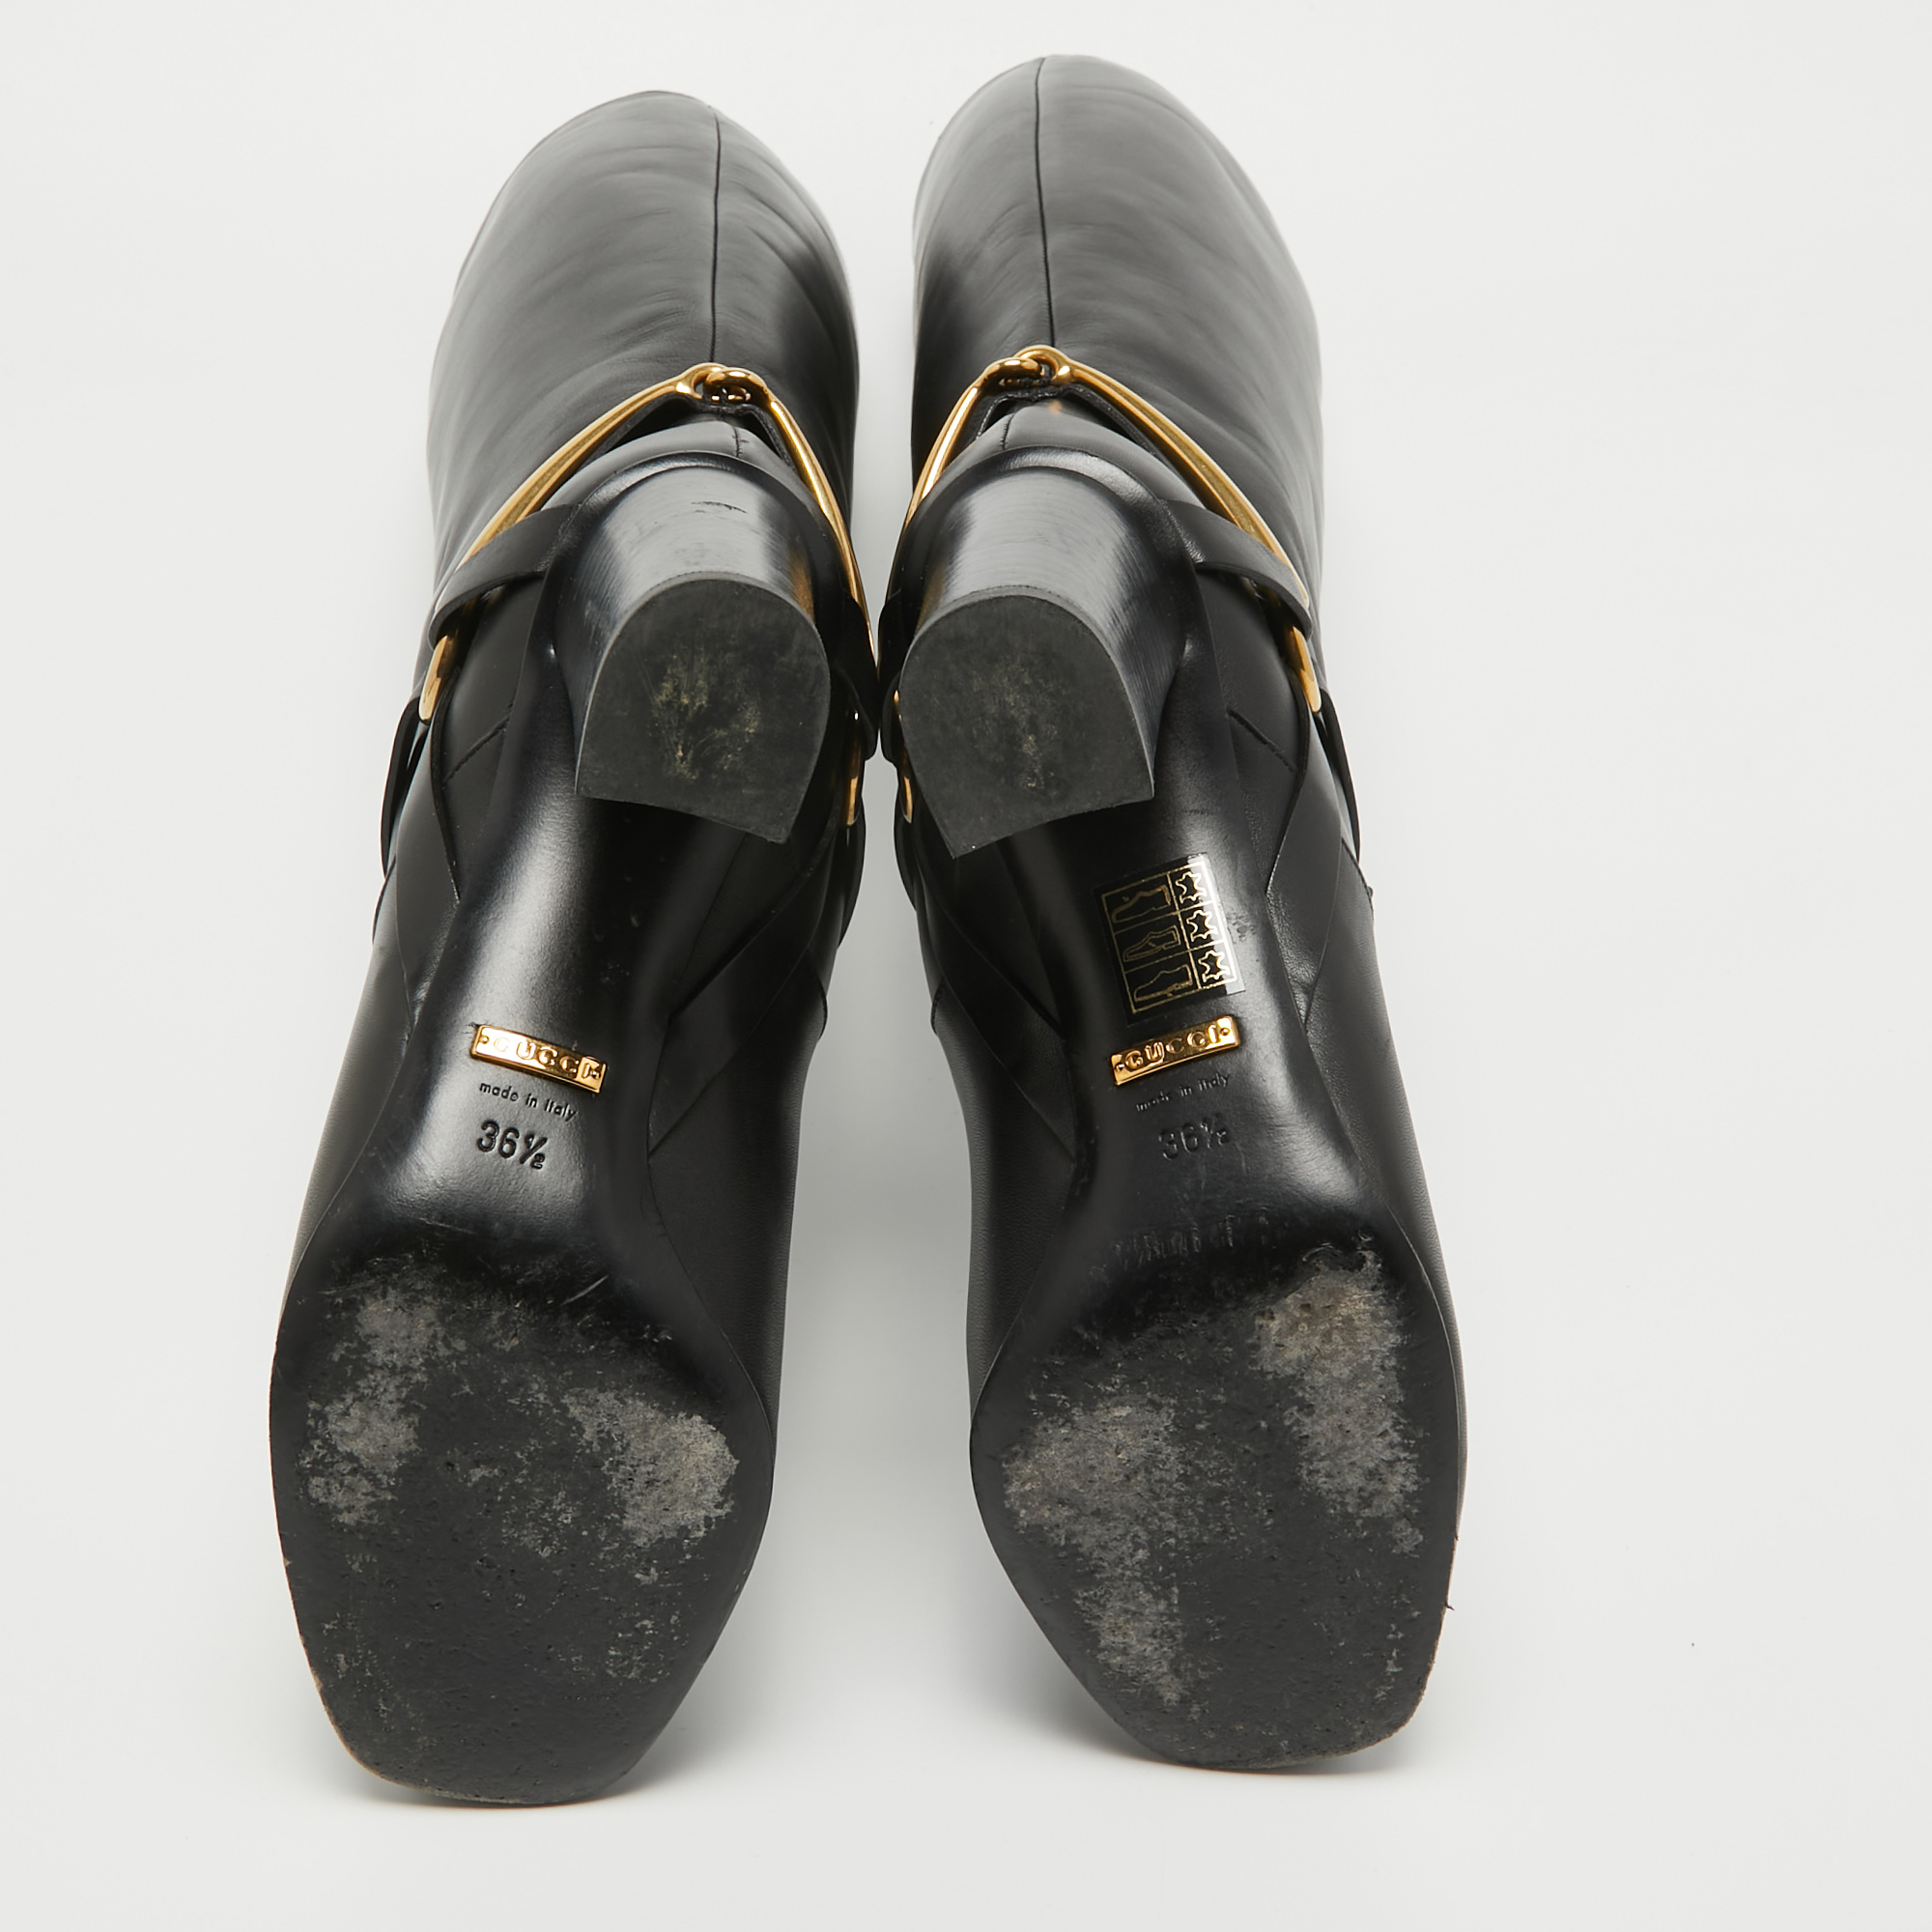 Gucci Black Leather Horsebit Knee Length Boots Size 36.5